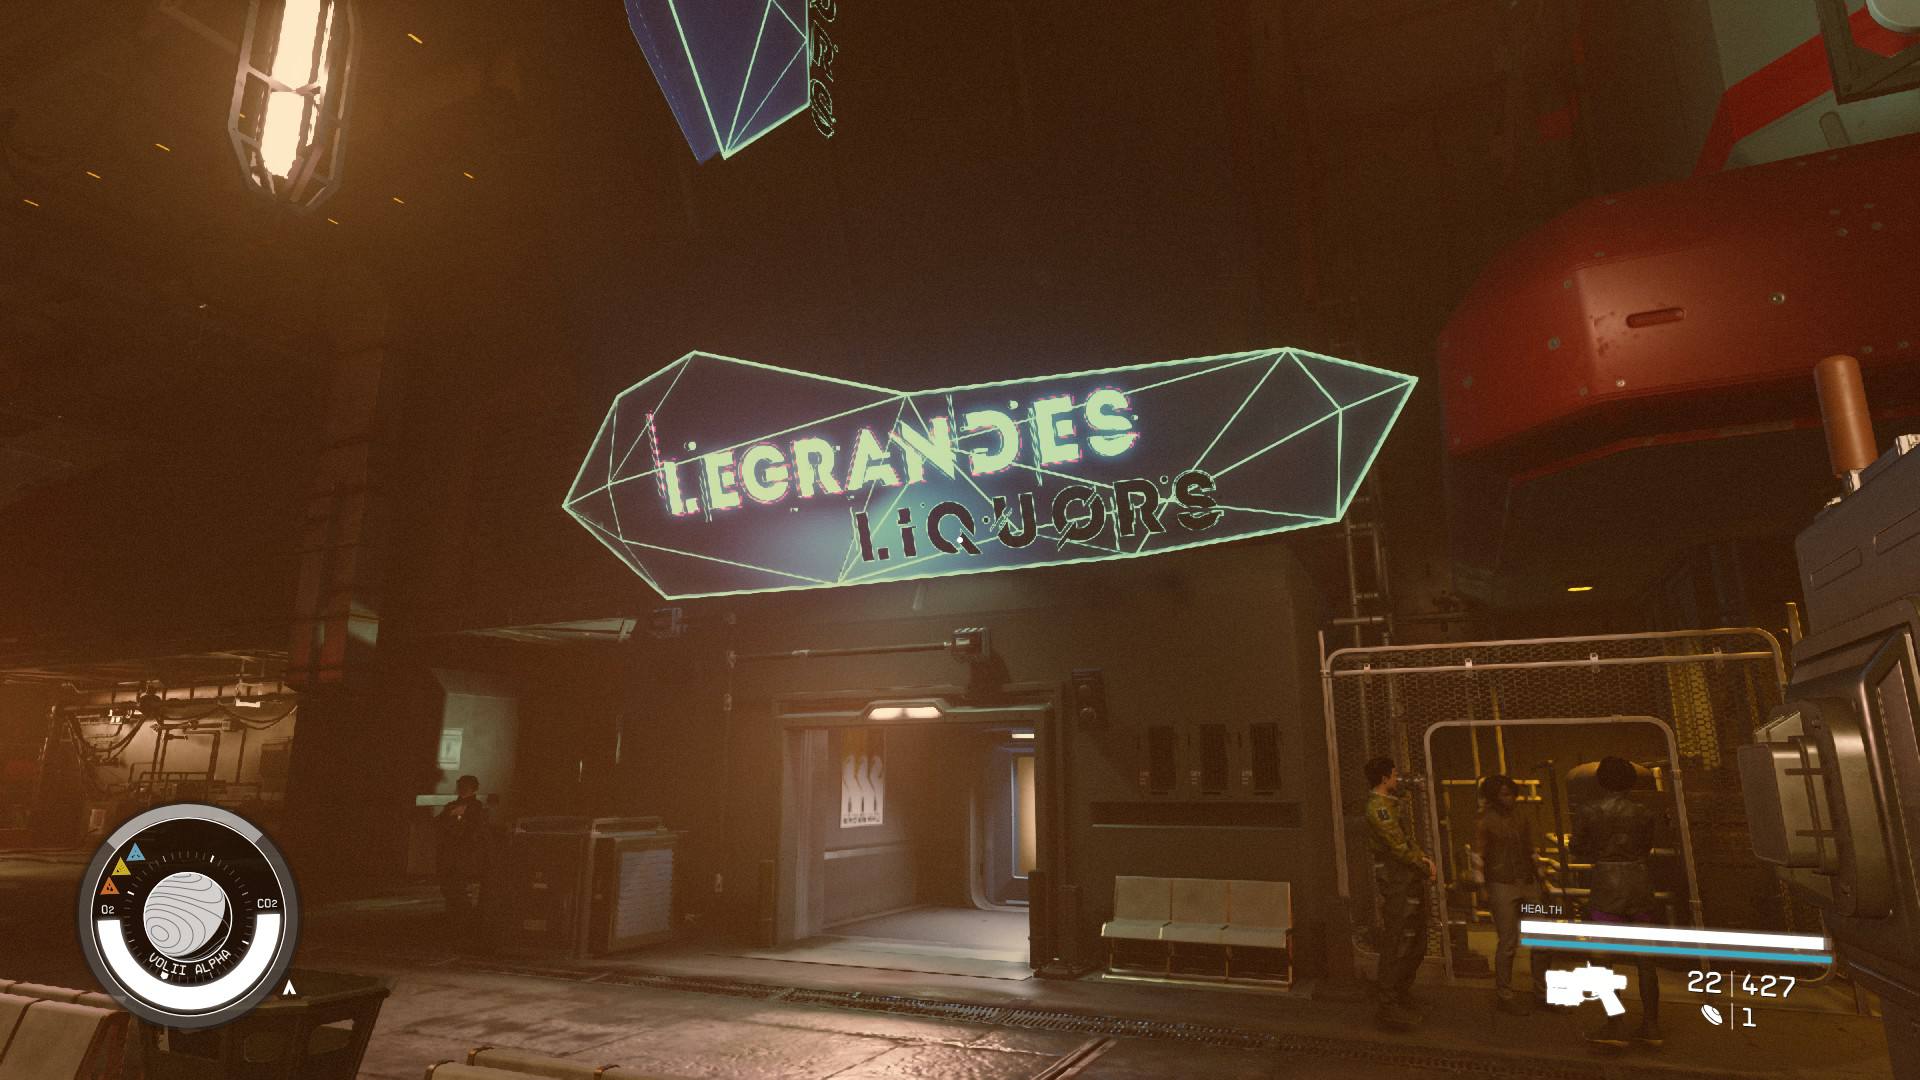 Starfield Neon shops: The front of Legrande's Liquors.